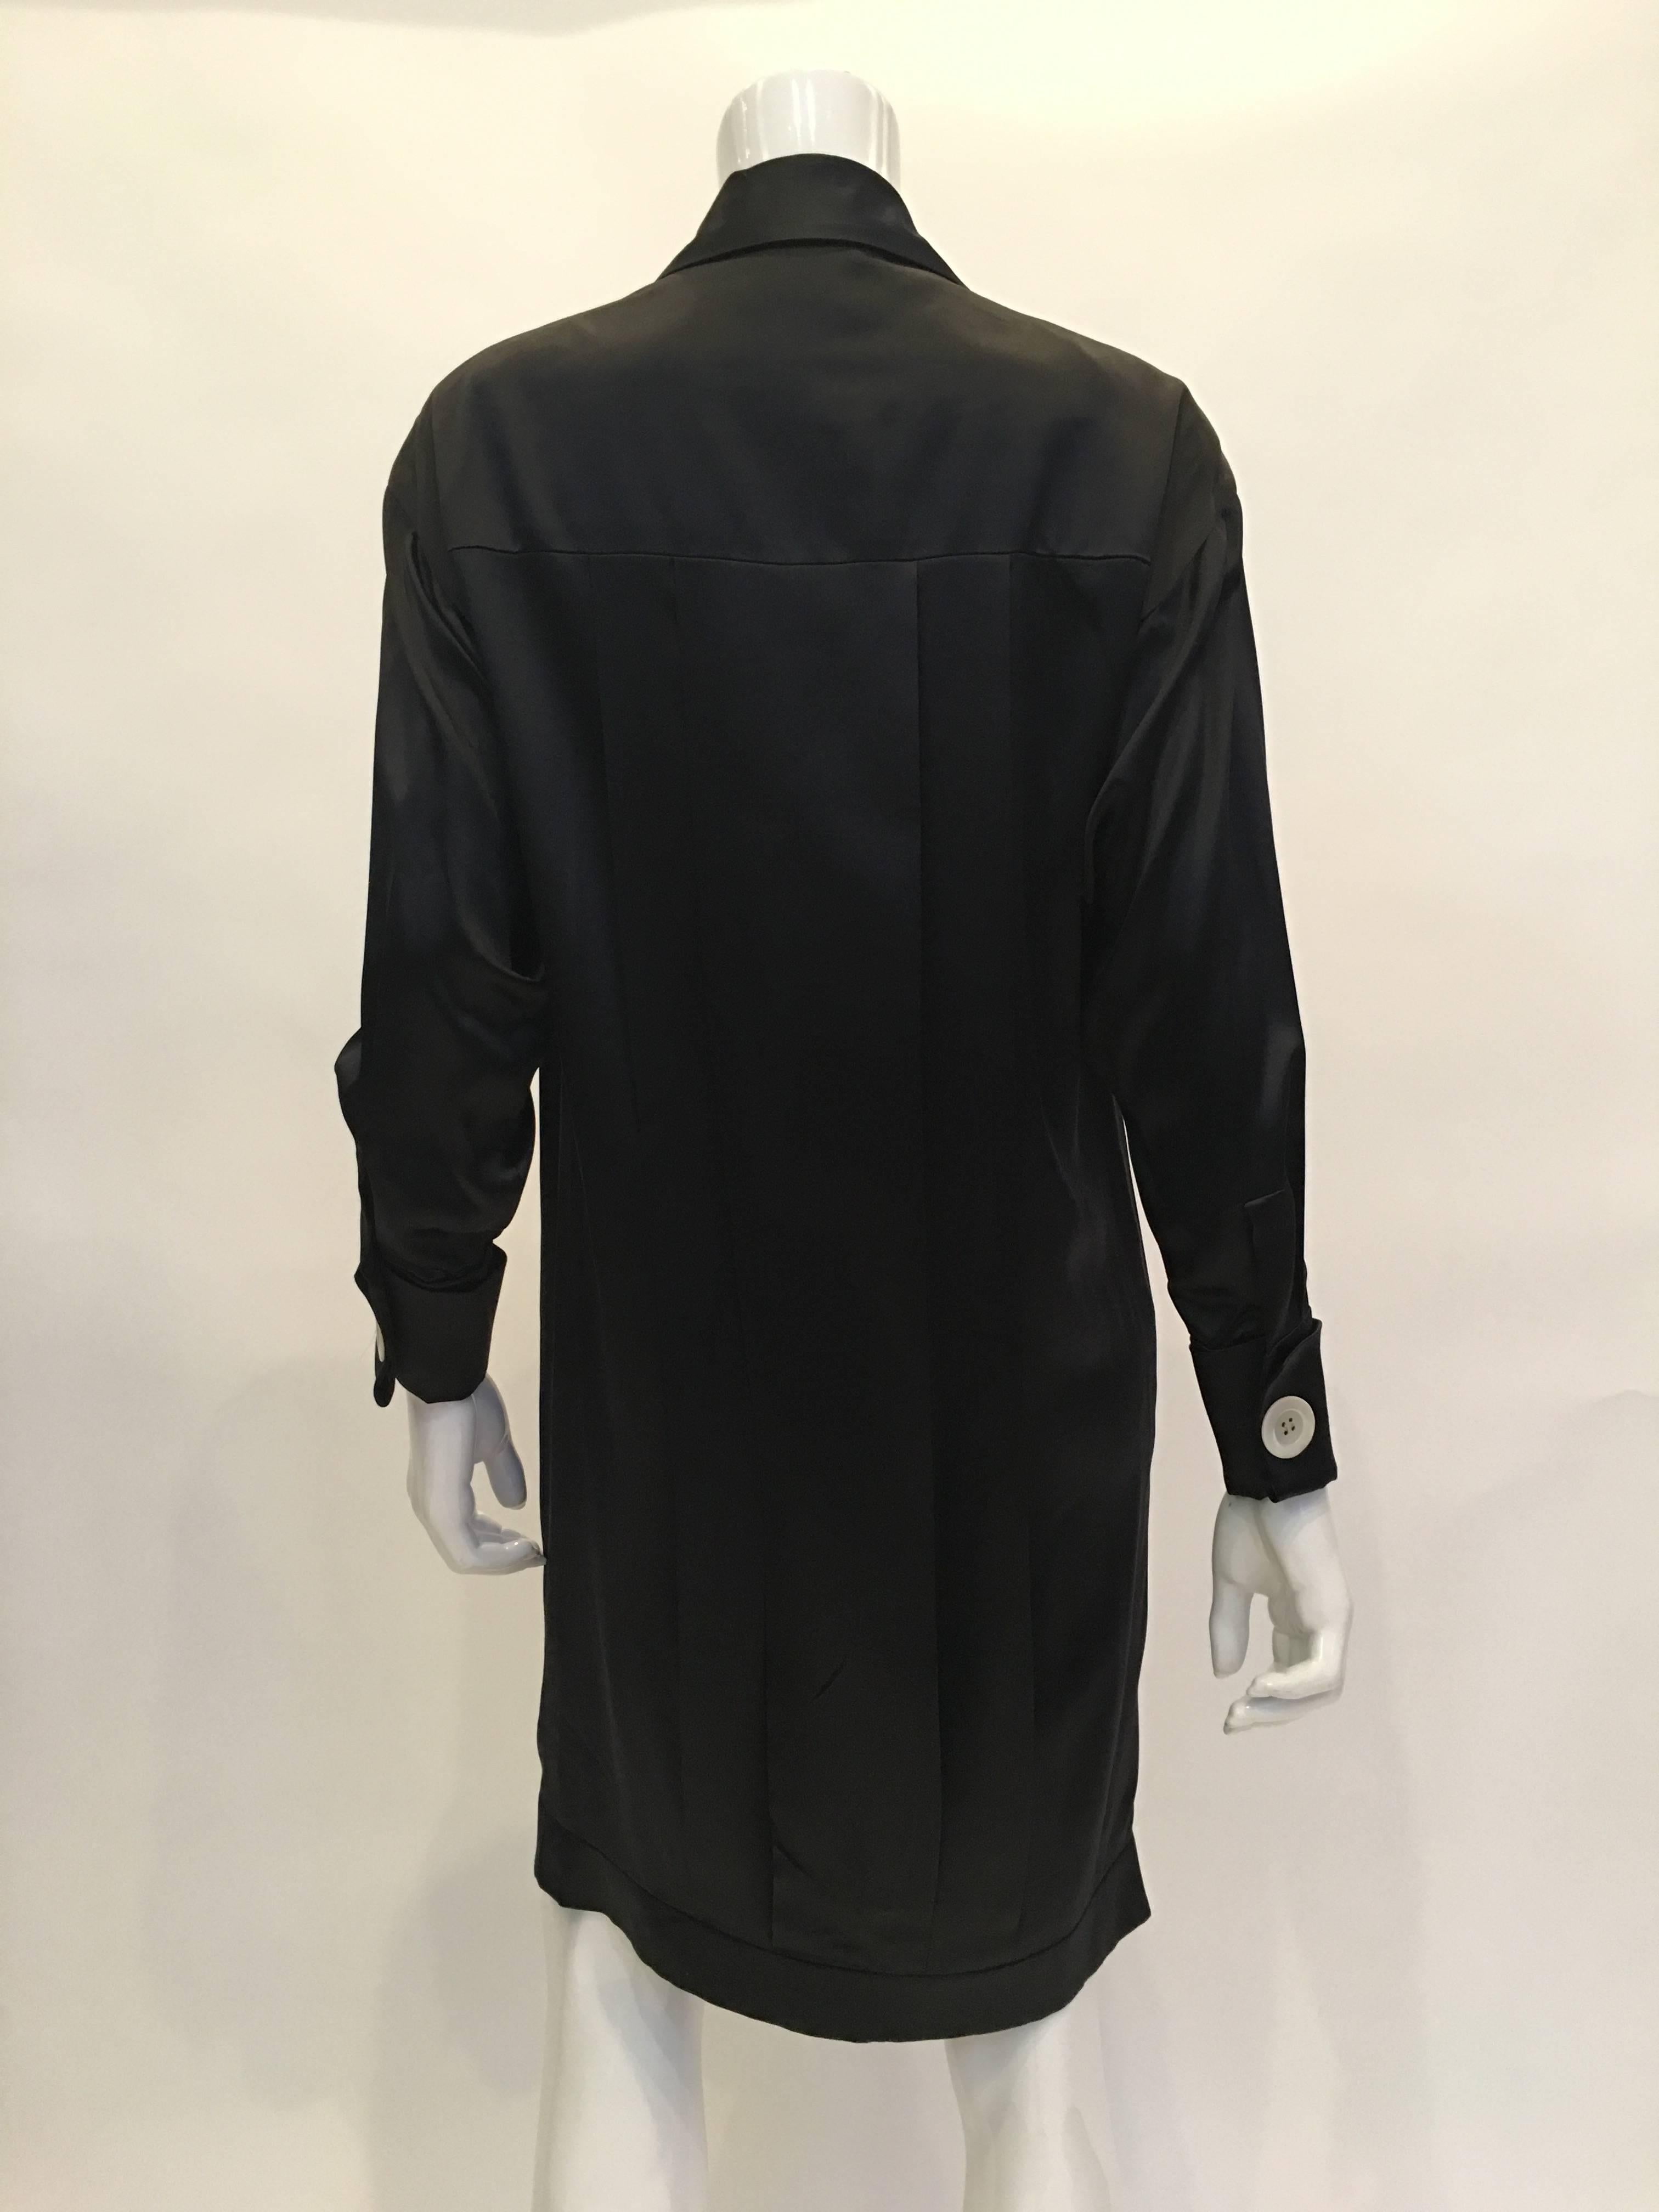 Women's or Men's Chanel 1990's Black Satin Sheath Dress